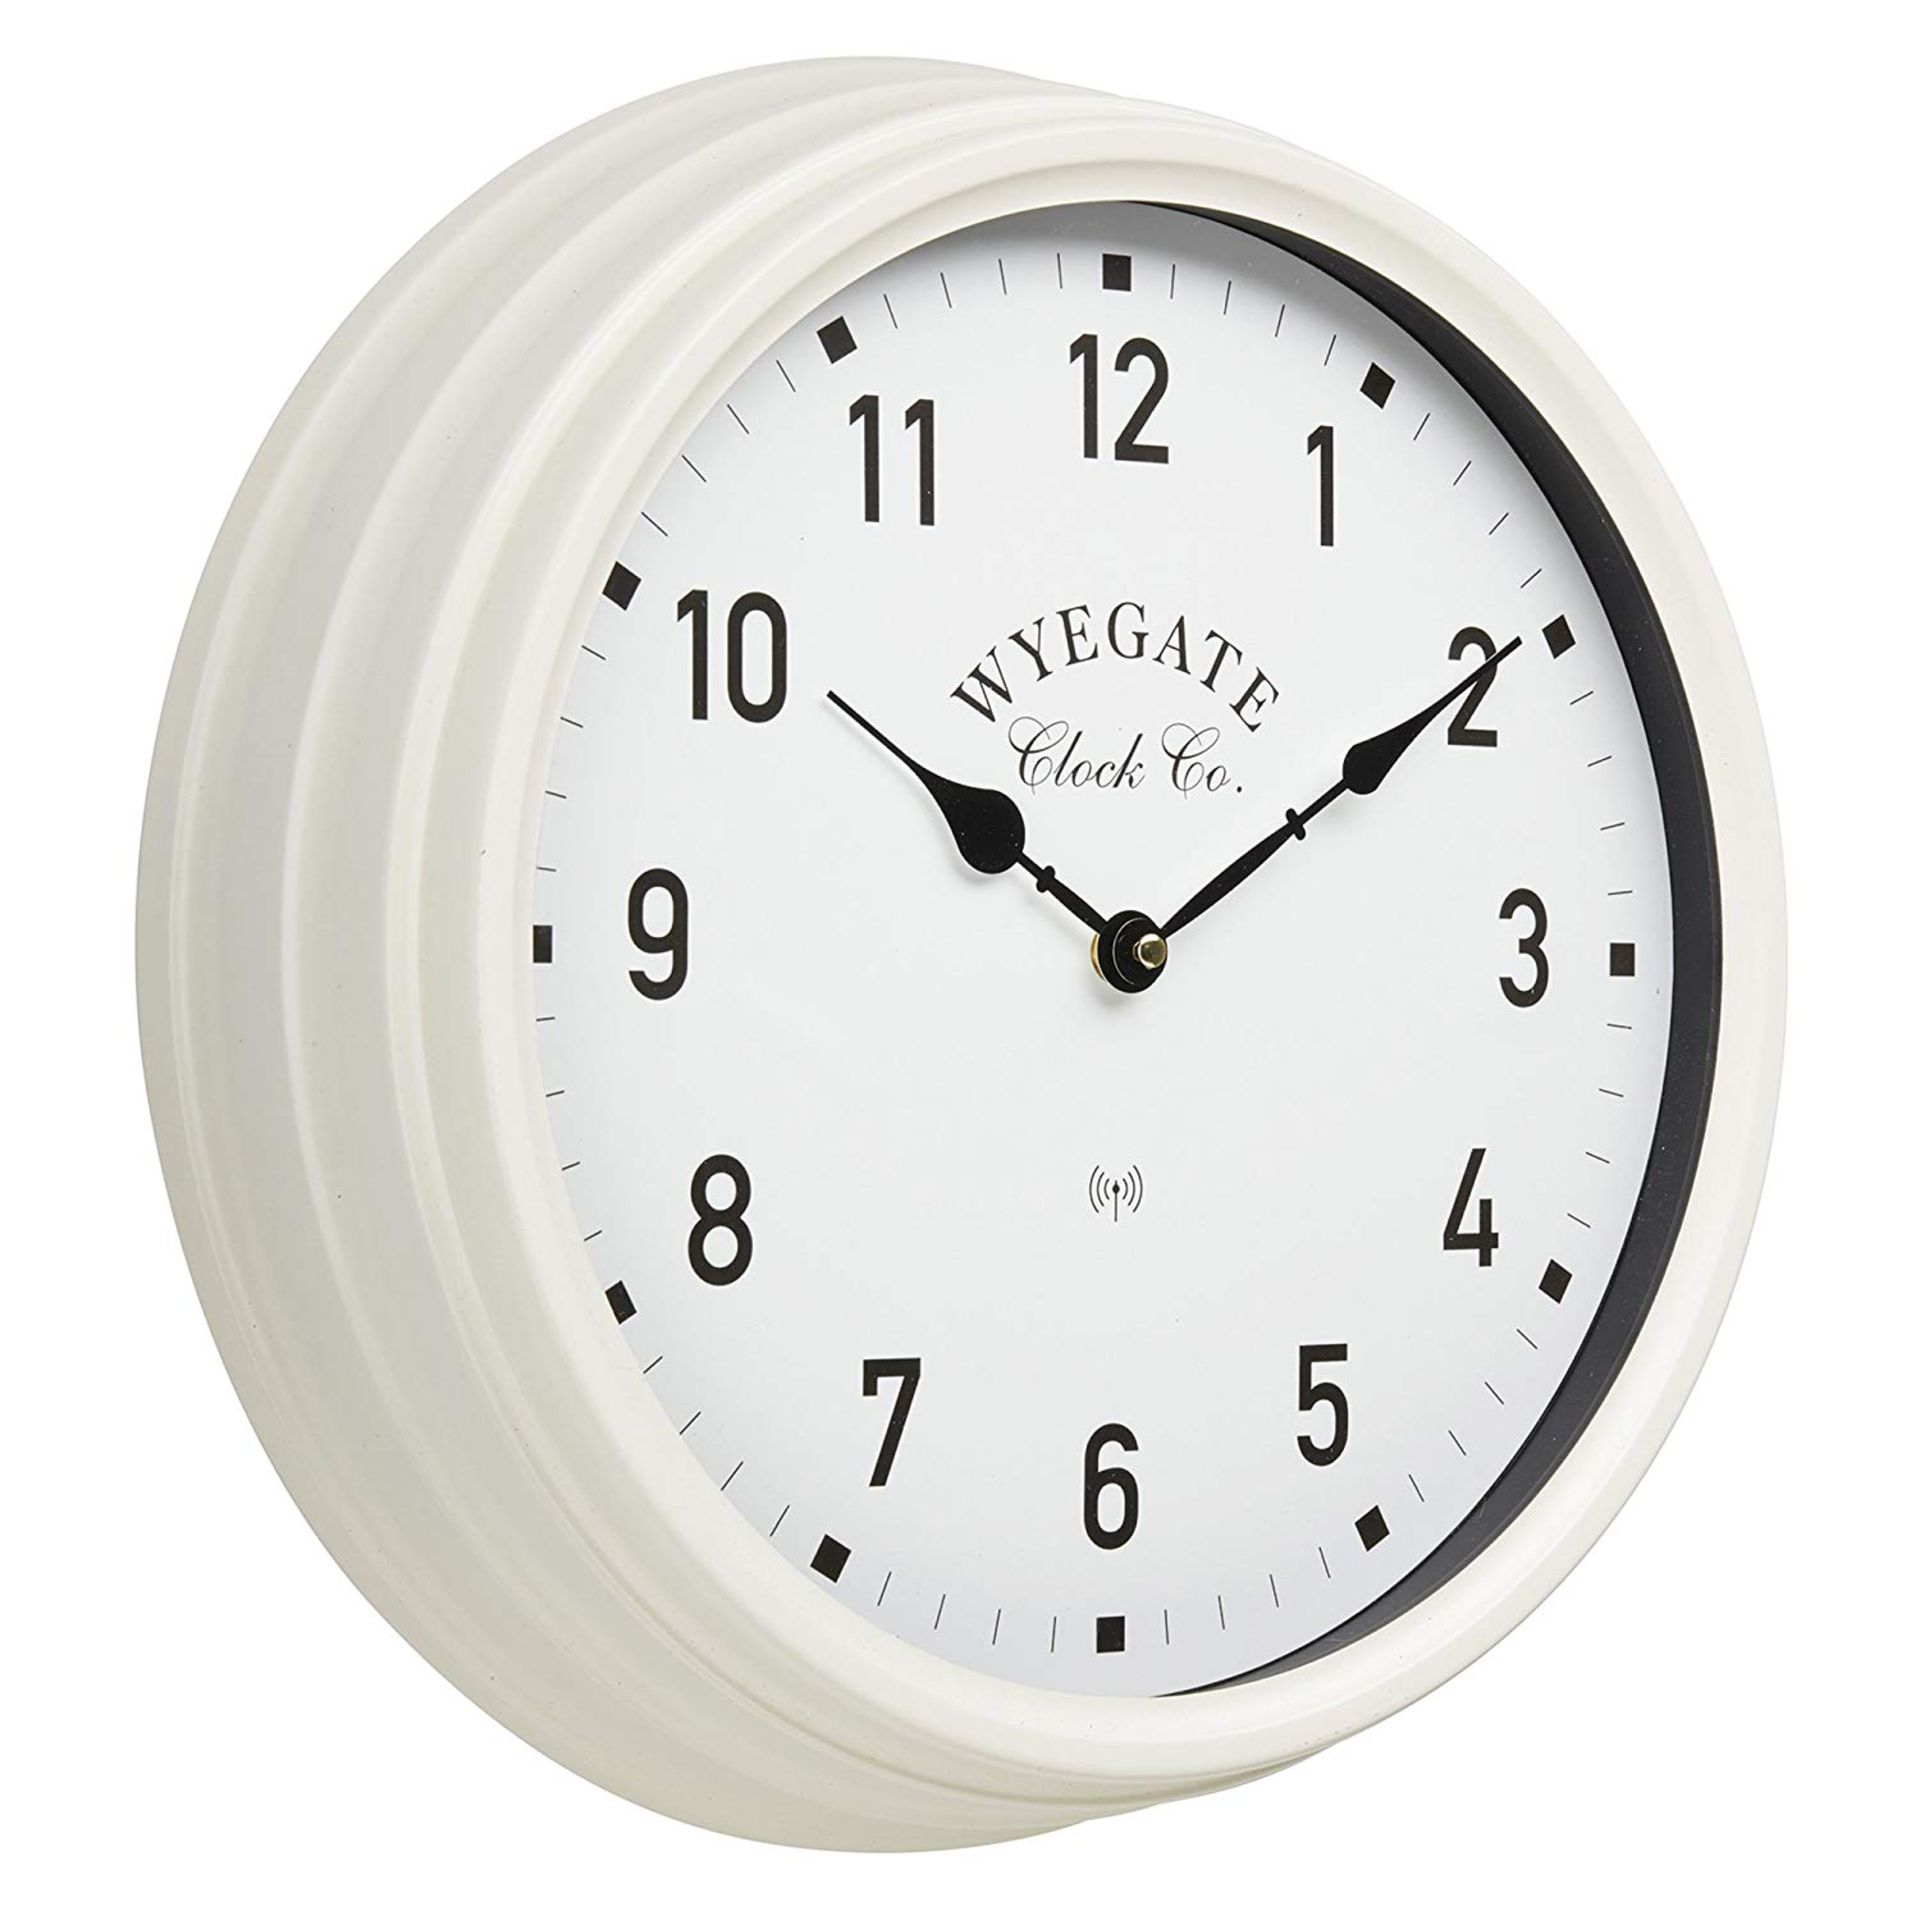 V Brand New Big Wyegate Garden/Indoor Clock (Radio Controlled) - 39cm - Cream - RRP £24.99 - - Image 2 of 3